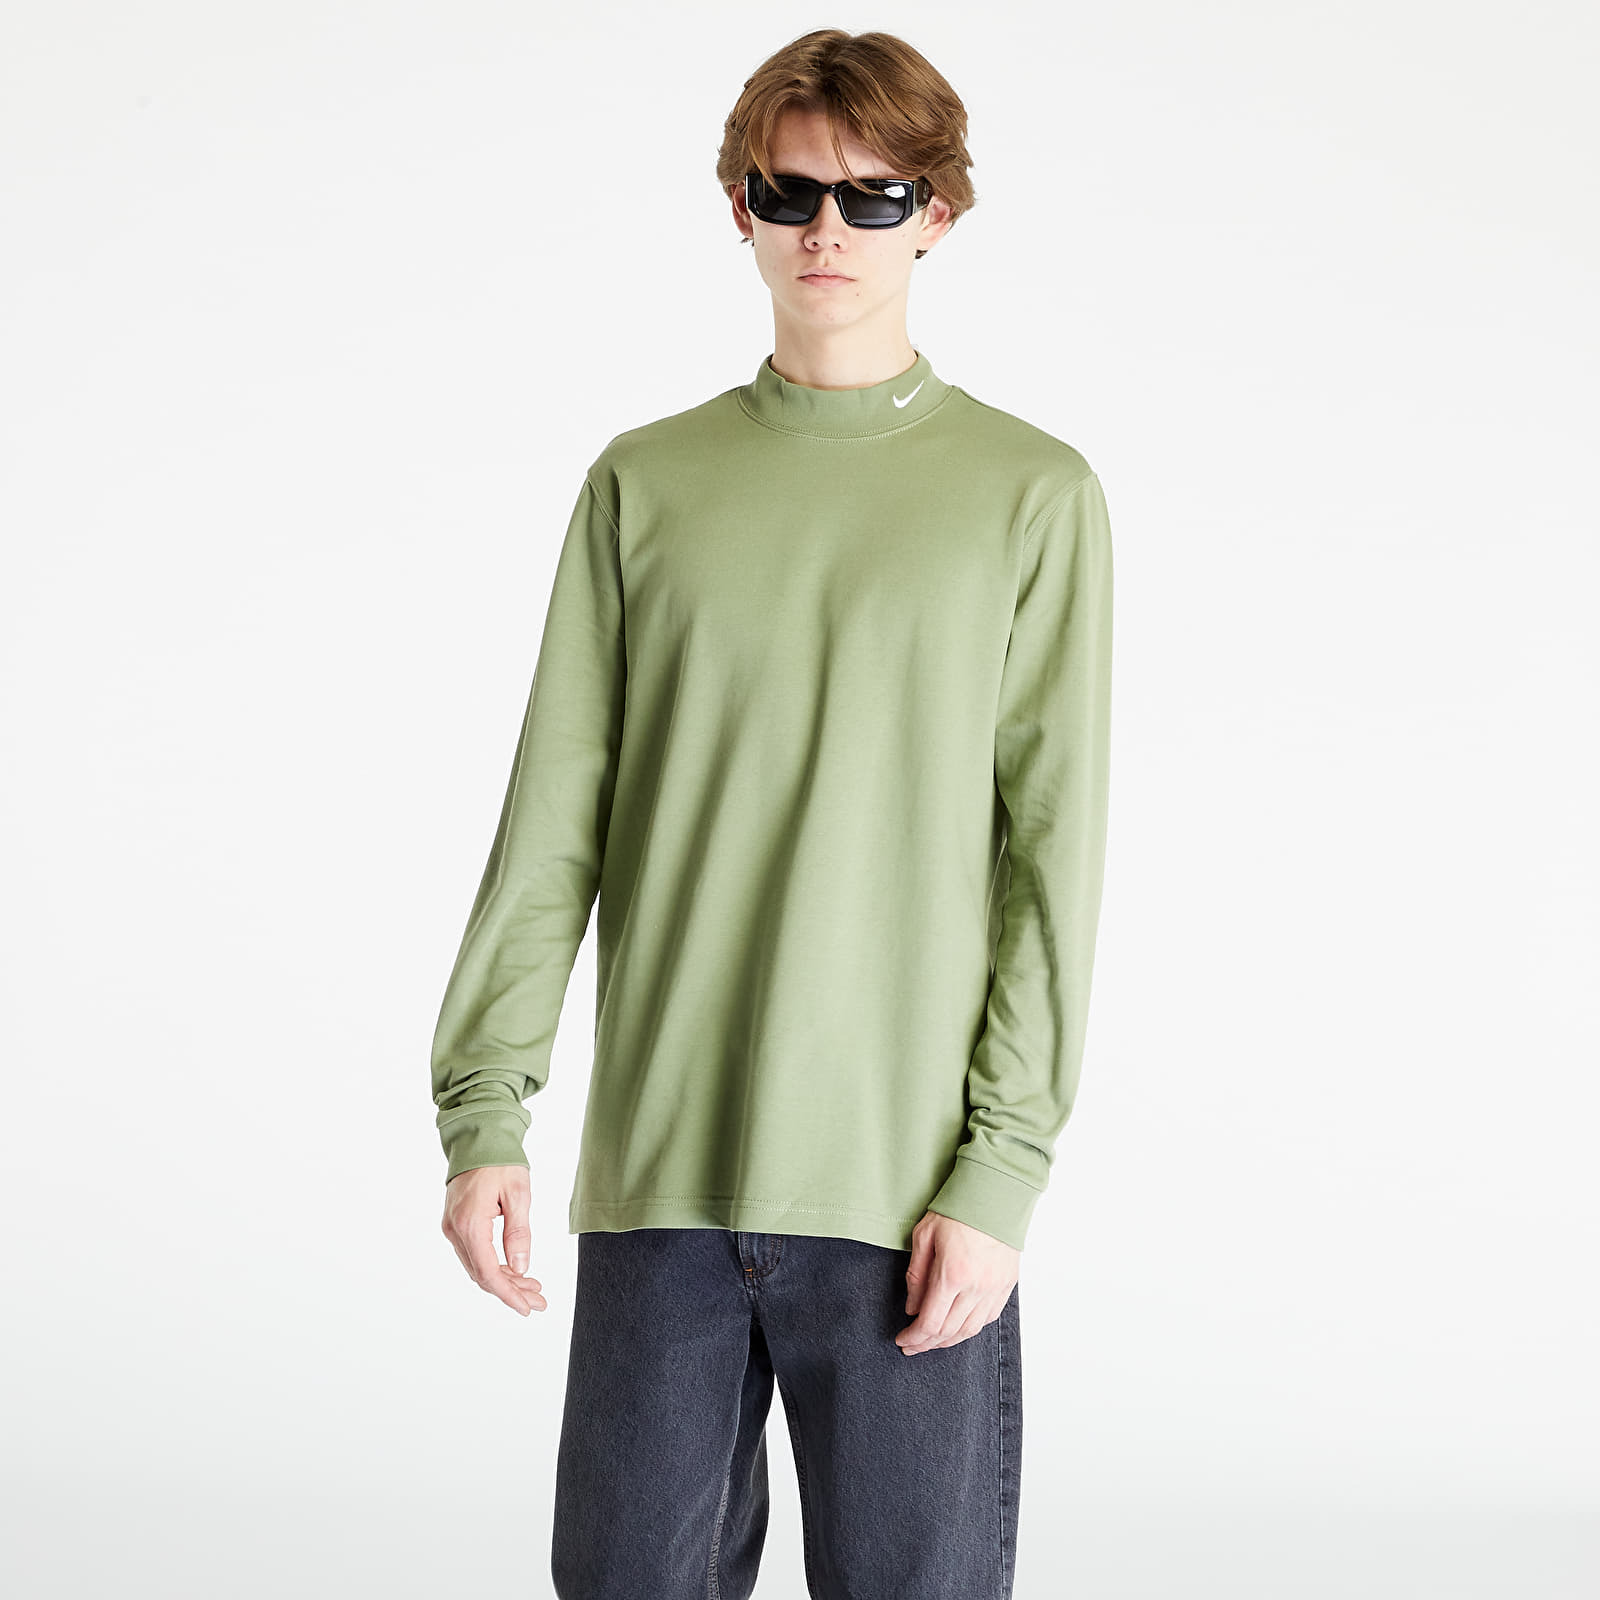 Nike - sportswear long sleeve mock-neck shirt oil green/ white